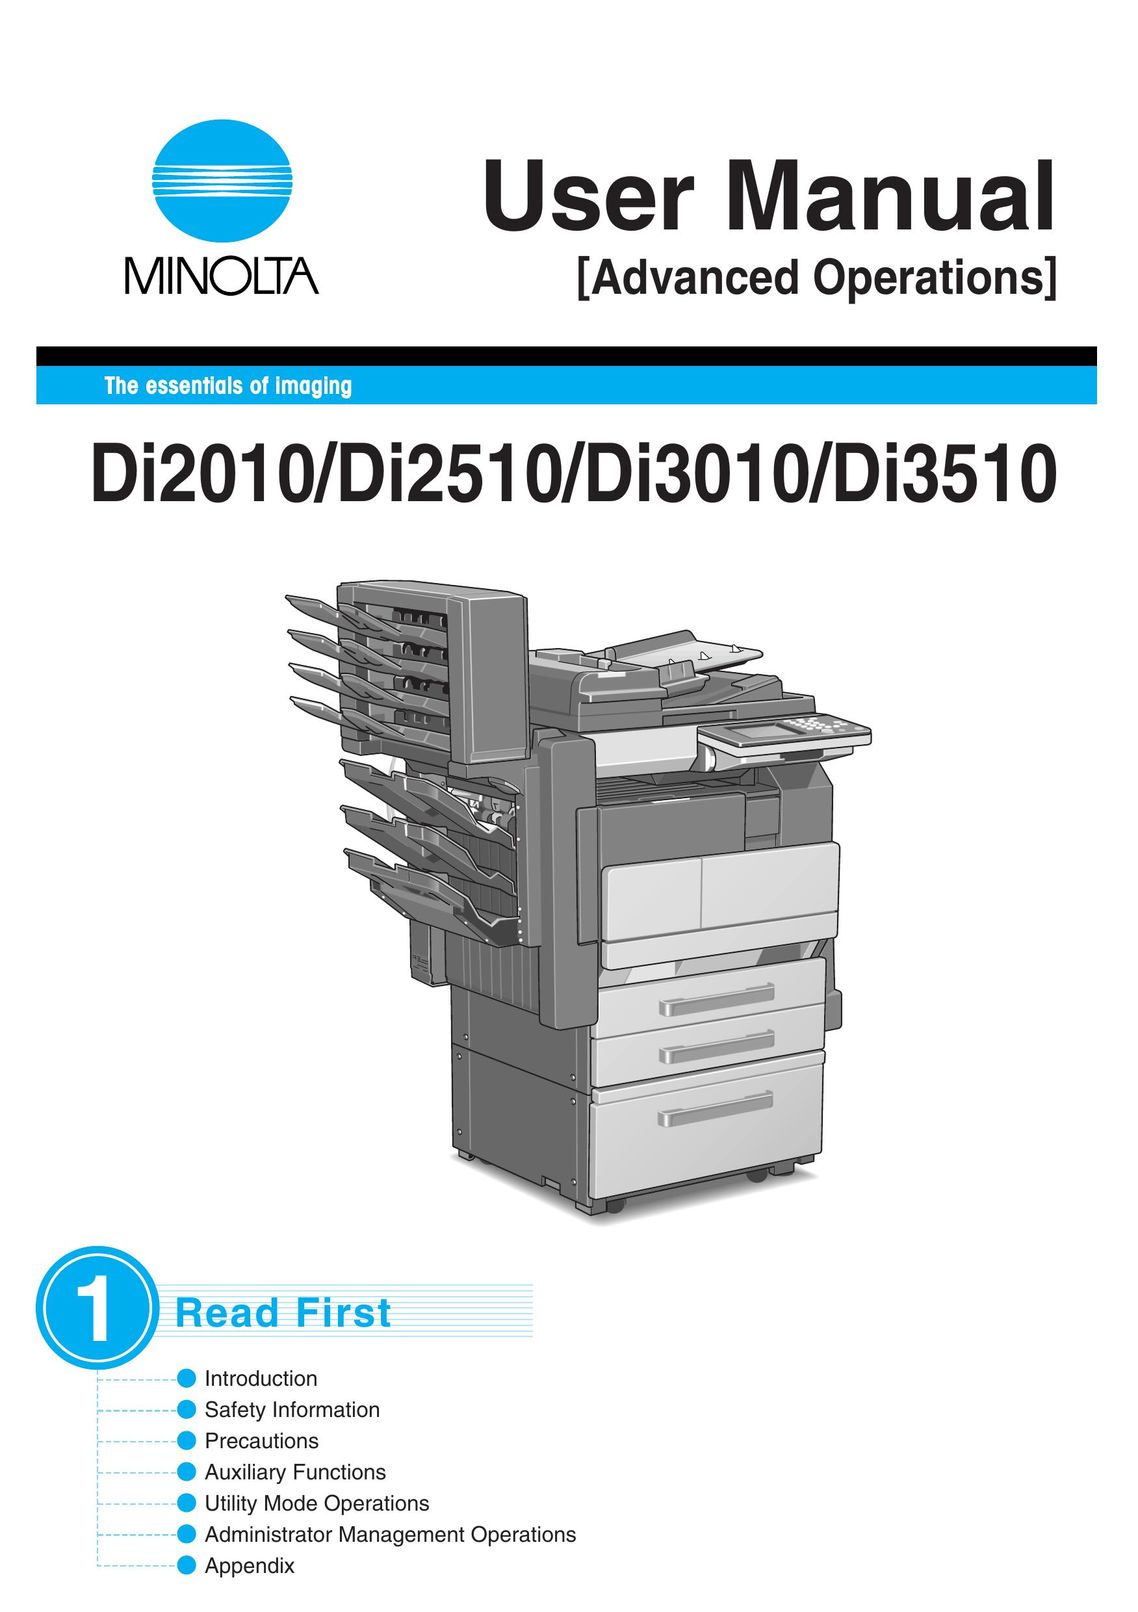 Minolta DI2010 Copier User Manual